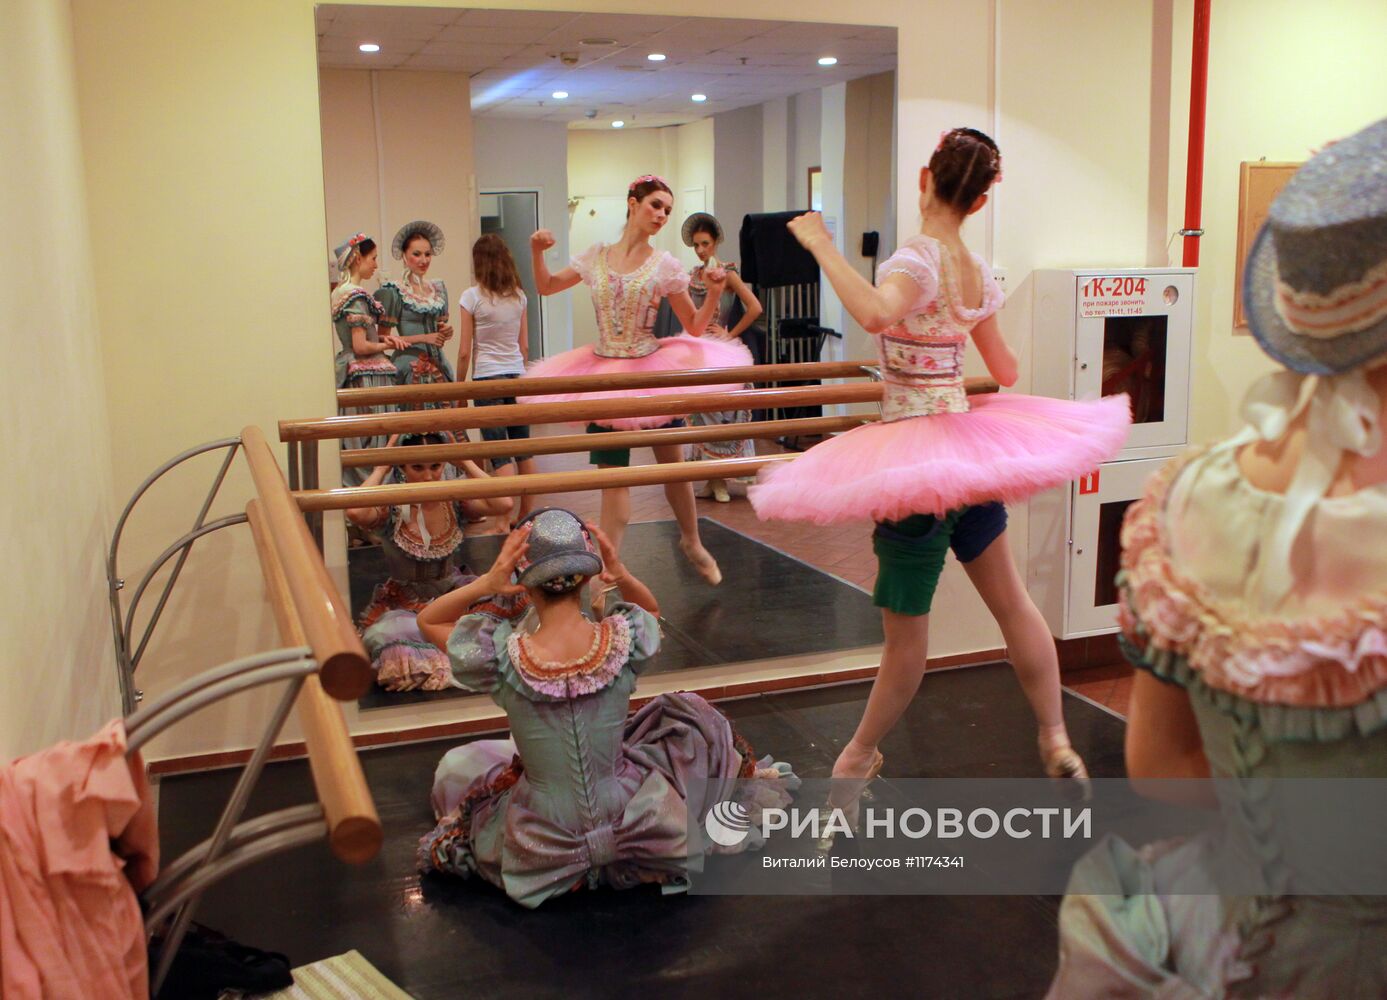 Репетиция балета "Коппелия" в хореографии Ролана Пети